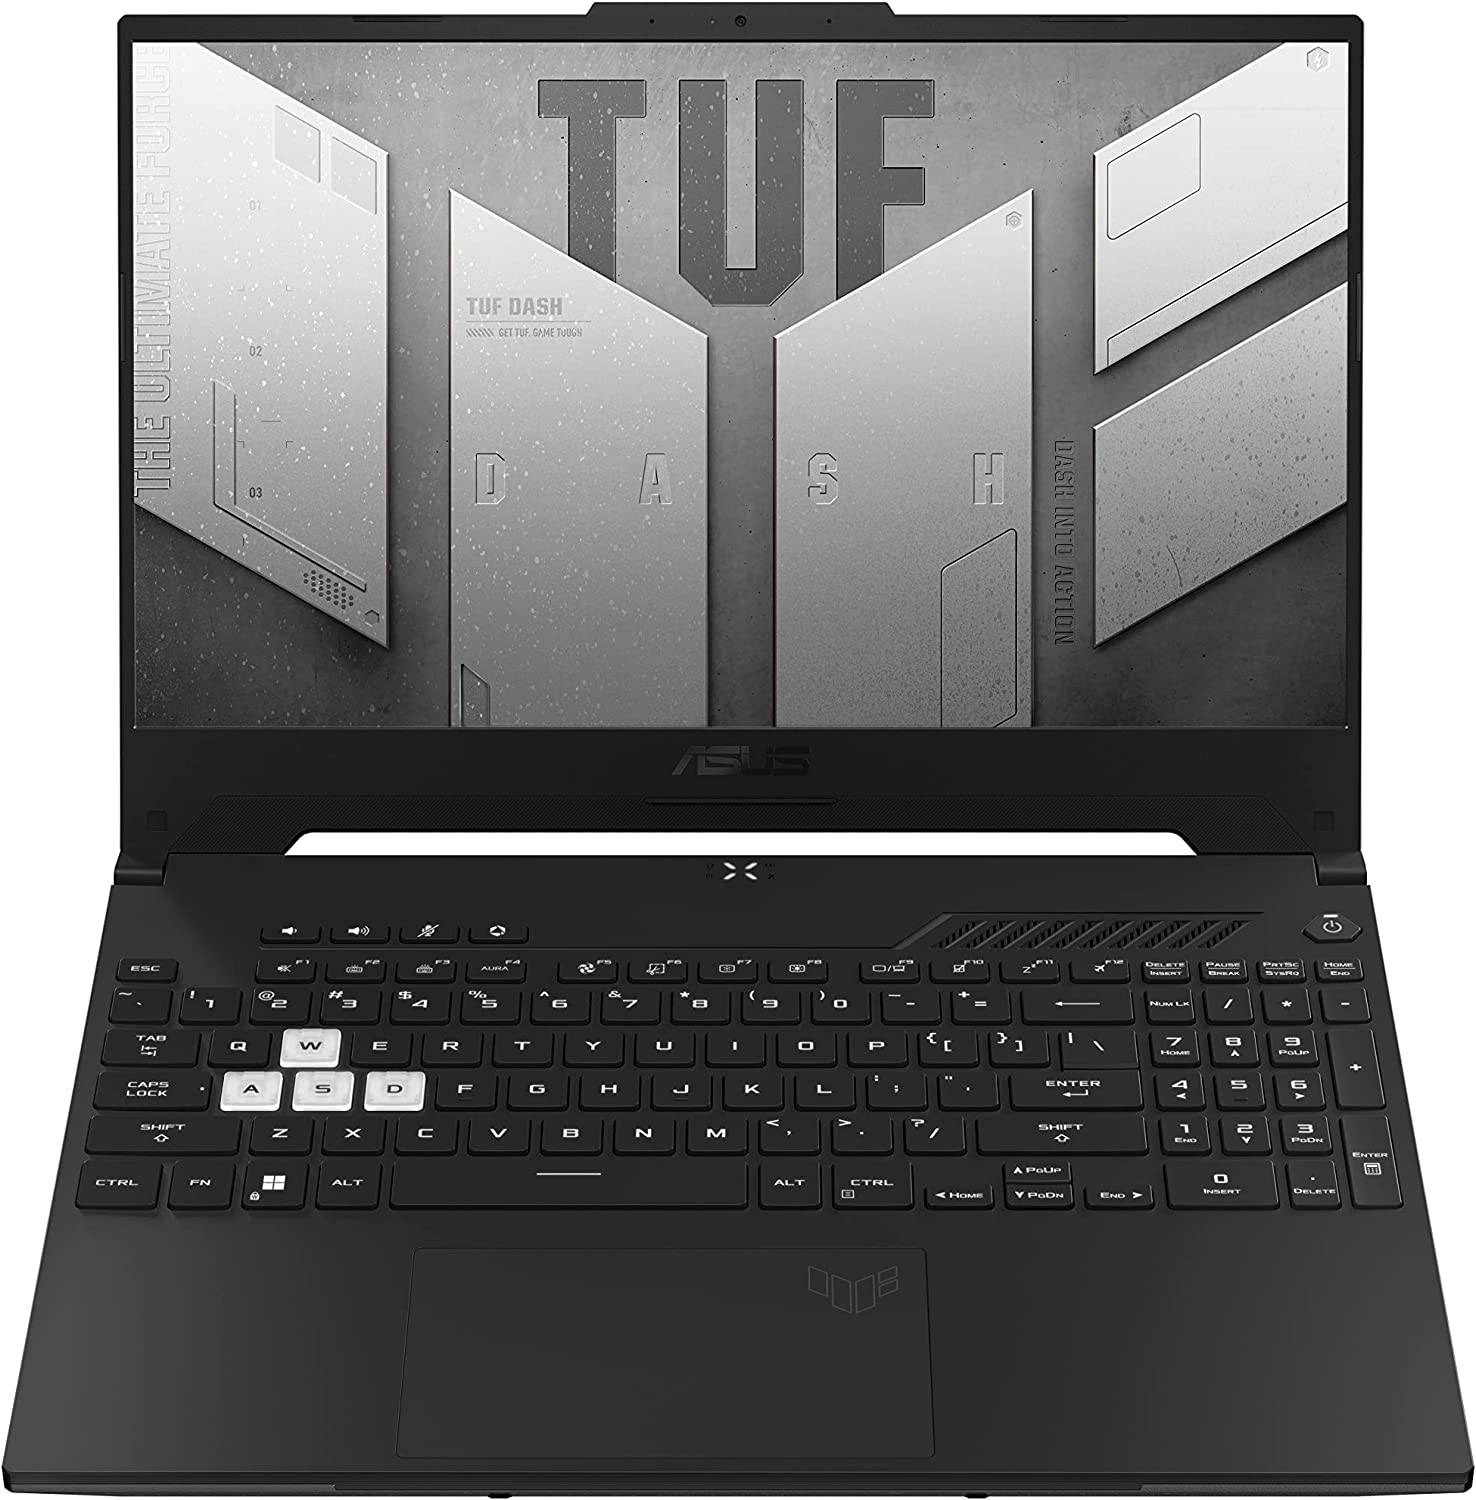 ASUS TUF Dash F15 Gaming Laptop (15.6 inches 144Hz, Intel 12th Gen  i7-12650H, 16GB DDR5 RAM, 512GB PCle SSD, Geforce RTX 3070 8GB),  Thunderbolt 4